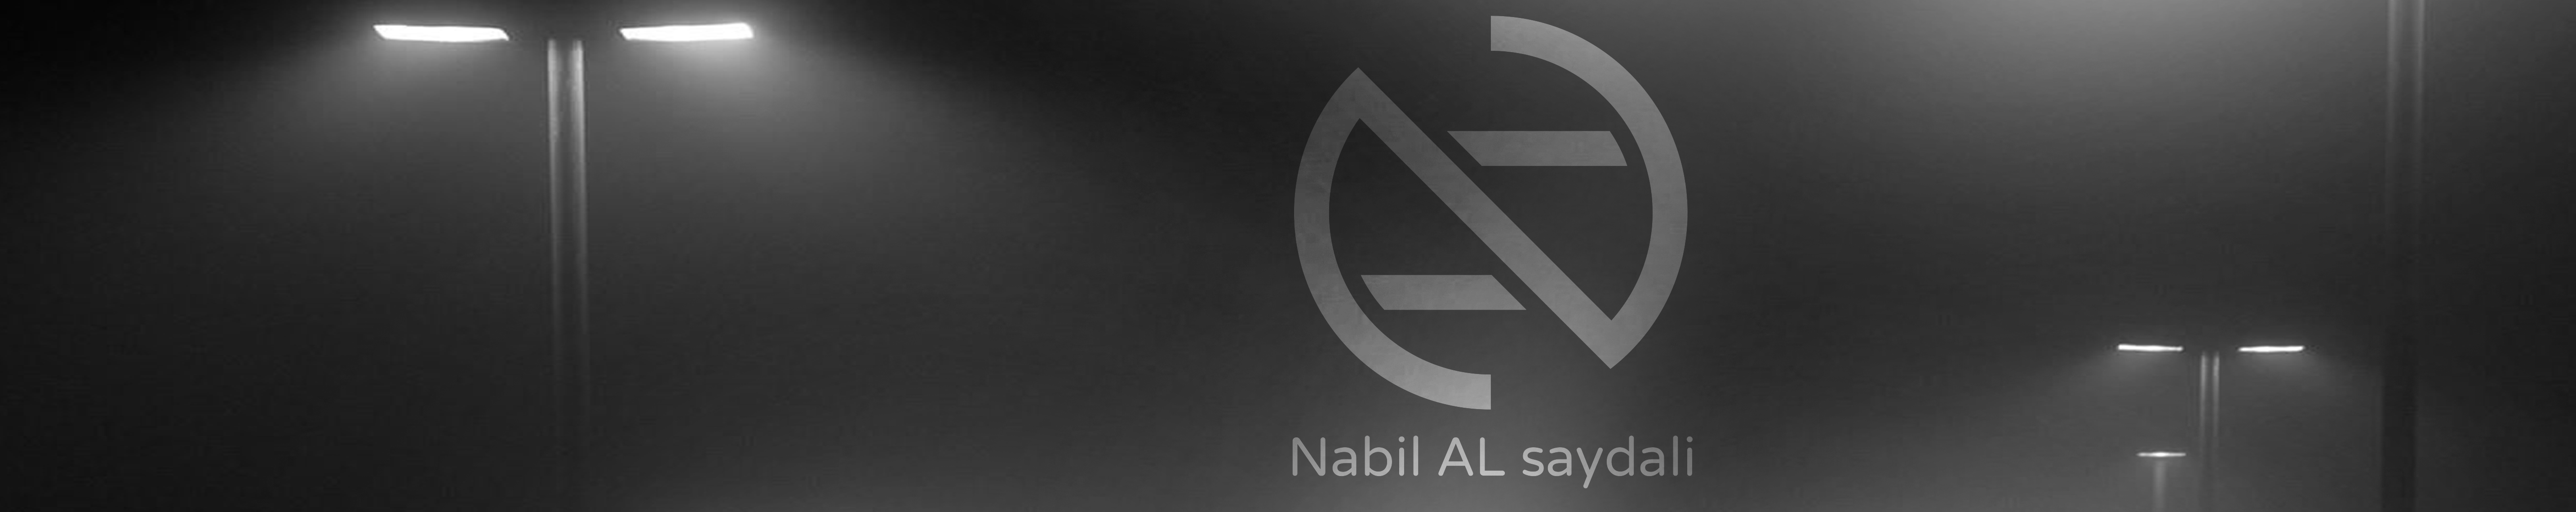 Baner profilu użytkownika Nabil Al Saydali